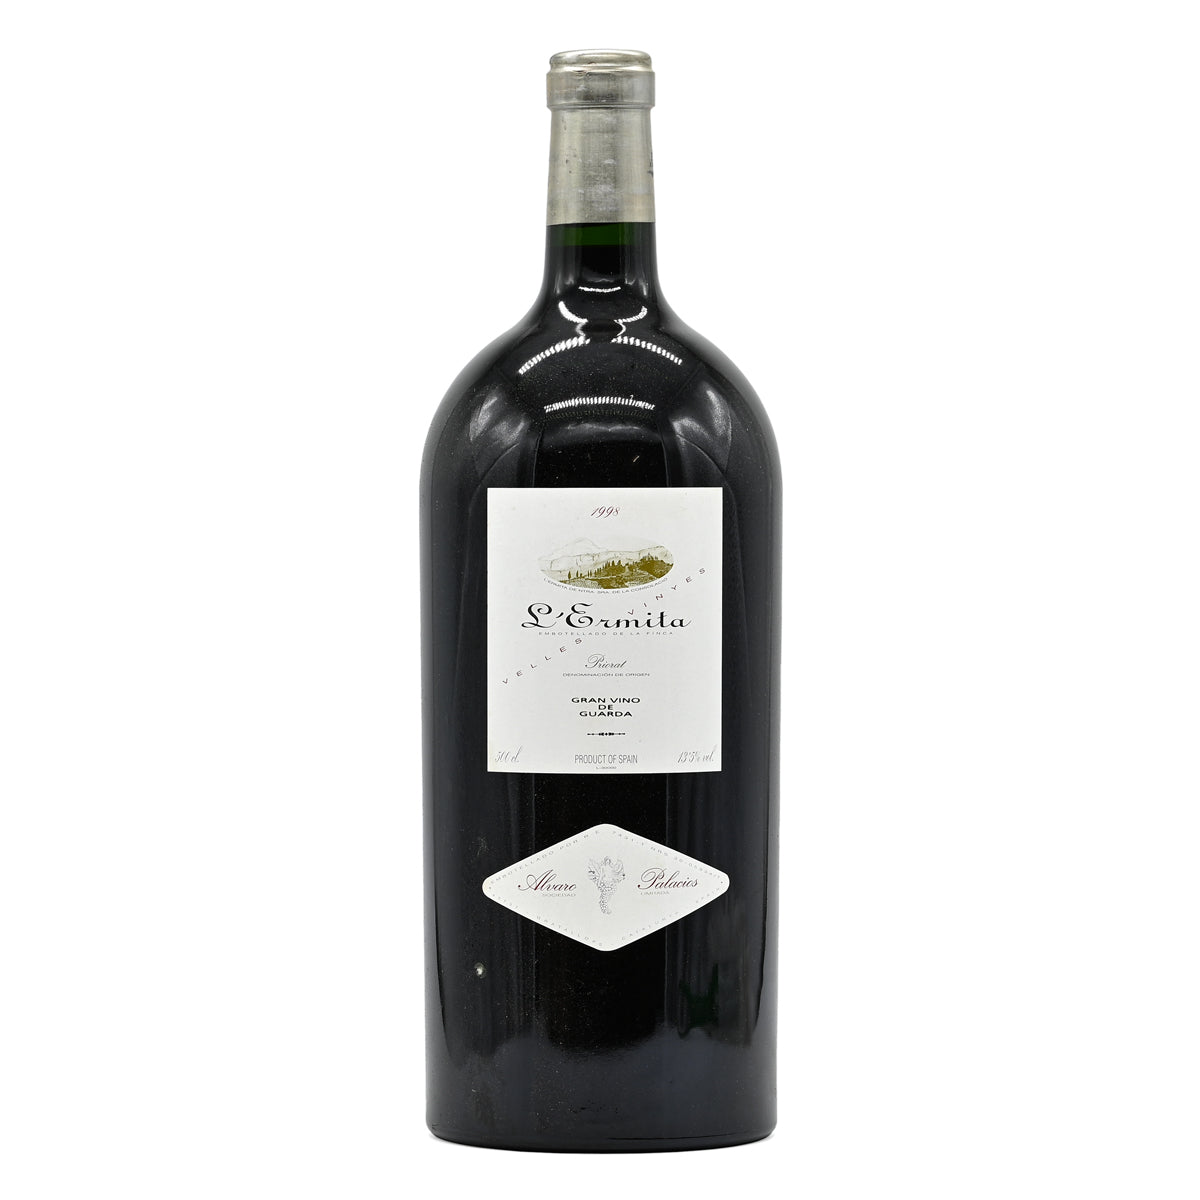 Alvaro Palacios L'Ermita 1998 Jeroboam, 5 litre Spanish red wine, made from Grenache; from Priorat, Catalonia, Spain – GDV Fine Wines, Hong Kong